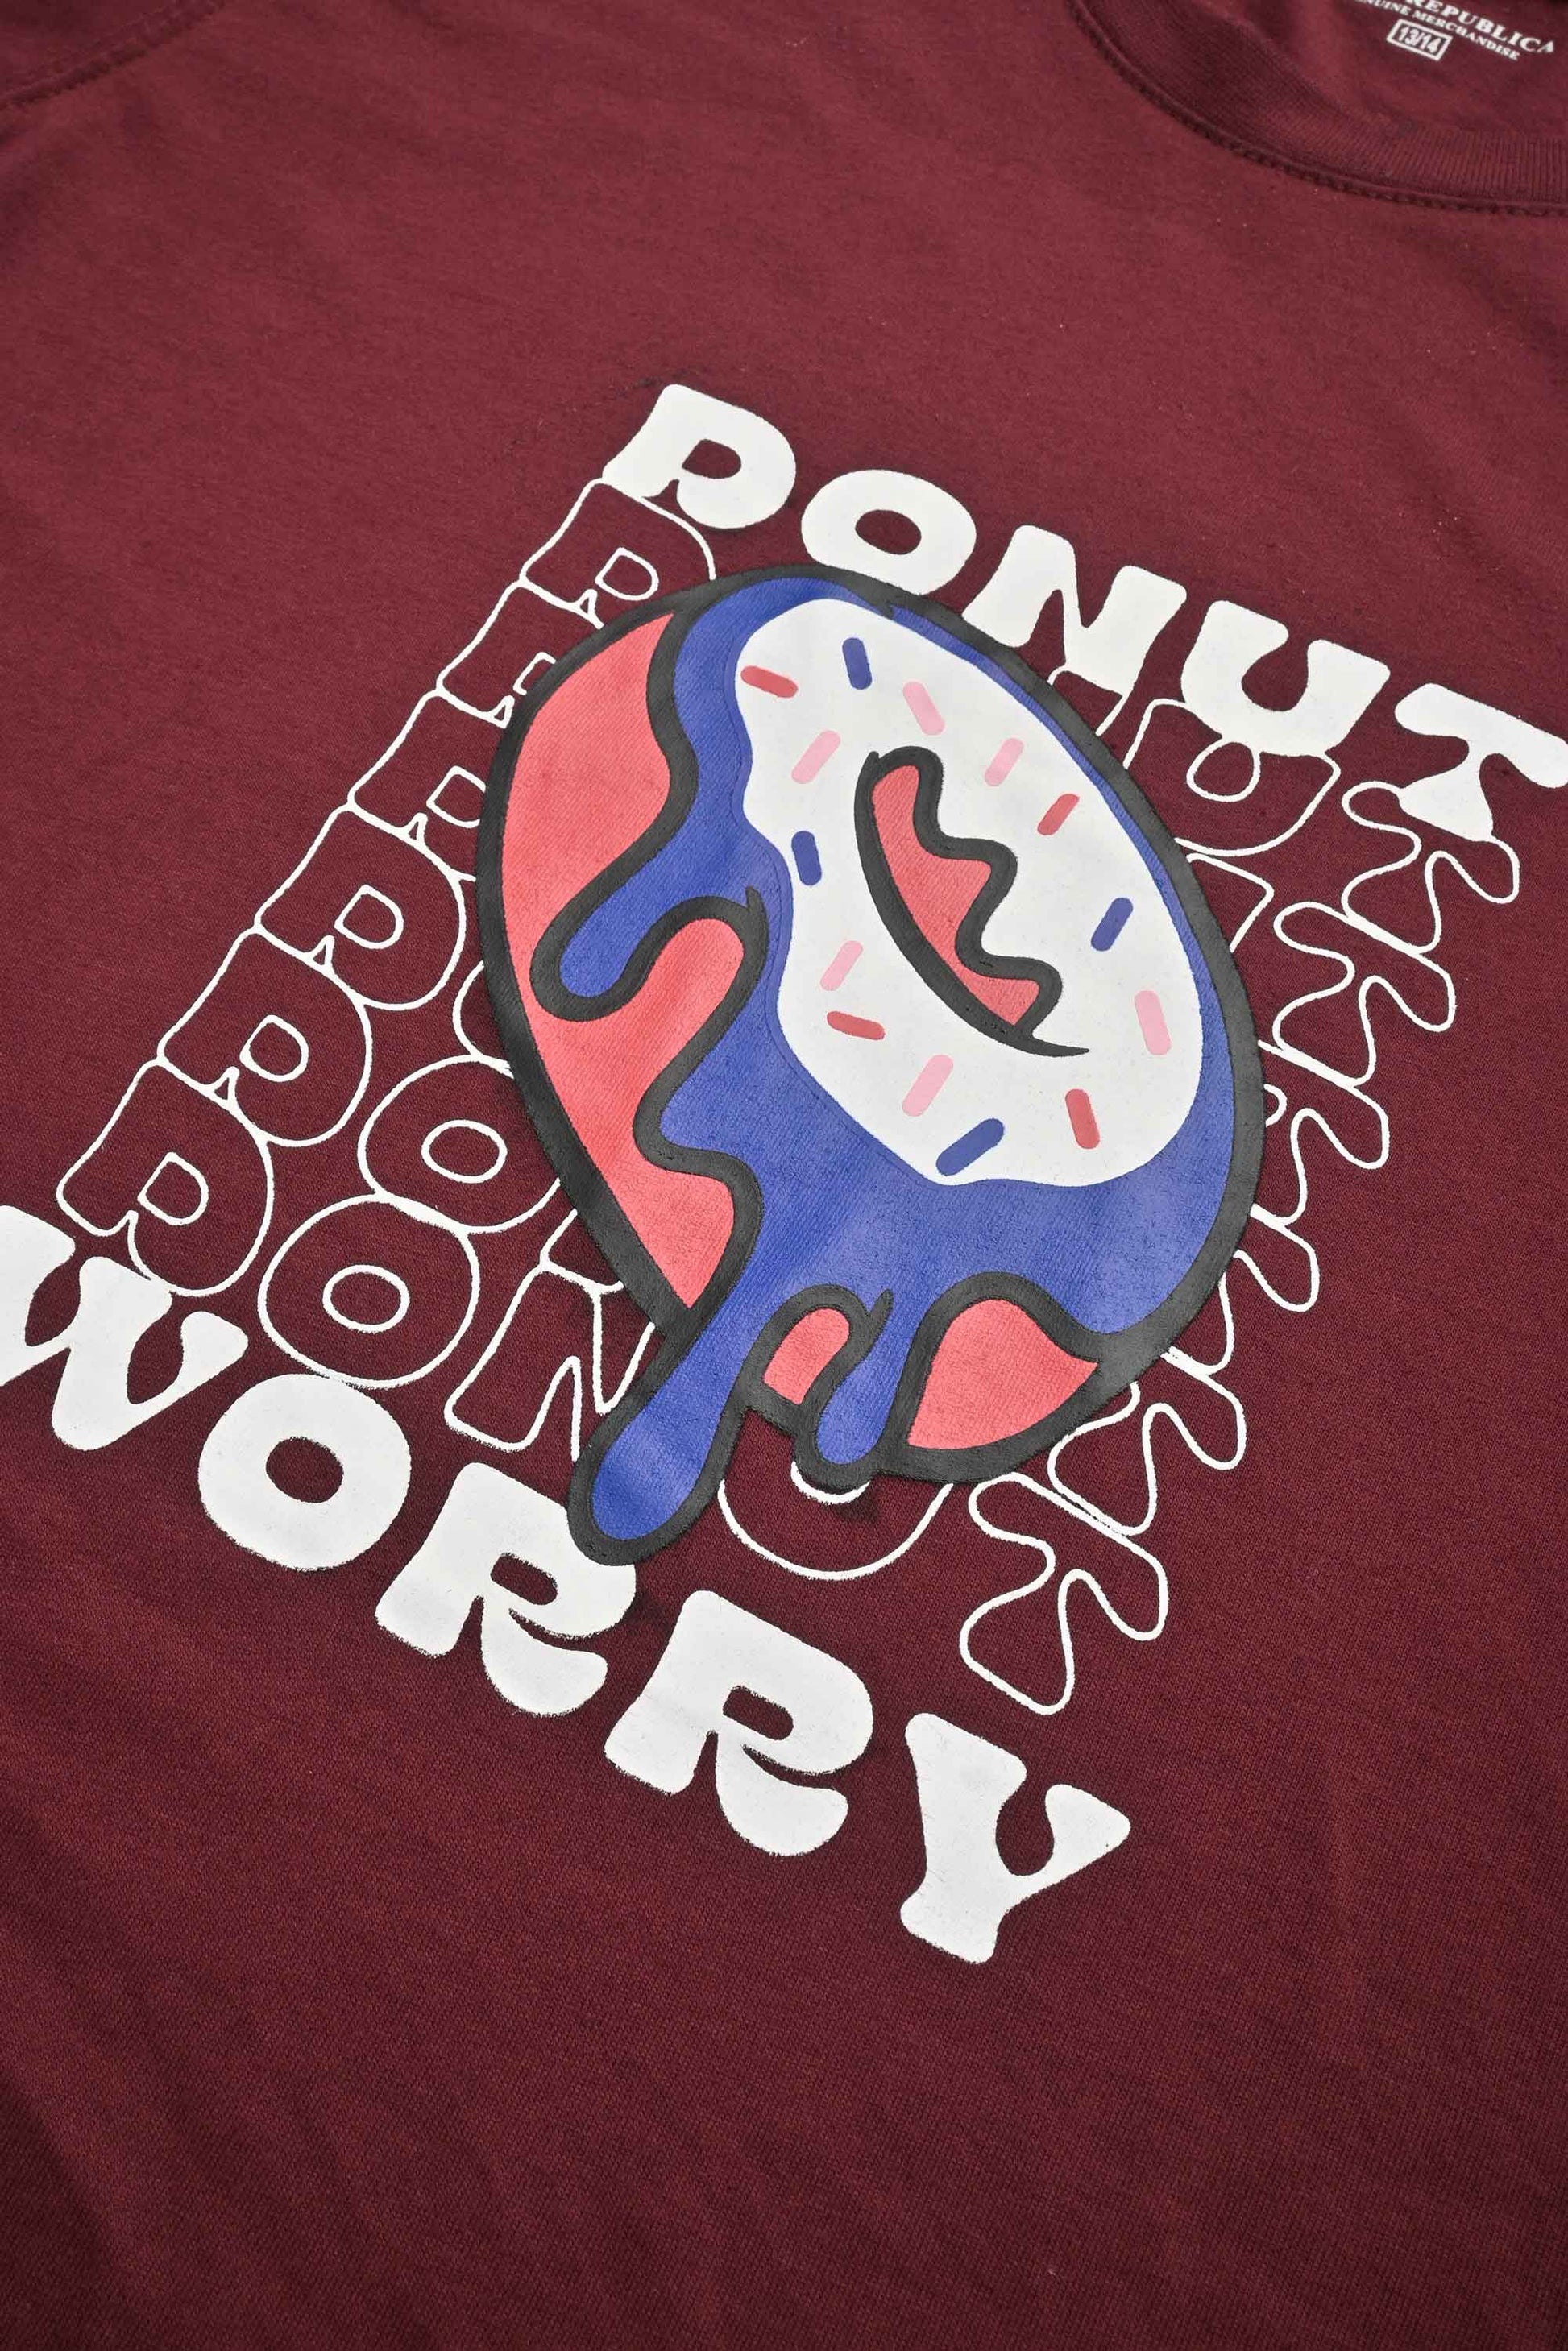 Polo Republica Boy's Donut Worry Printed Tee Shirt Boy's Tee Shirt Polo Republica 